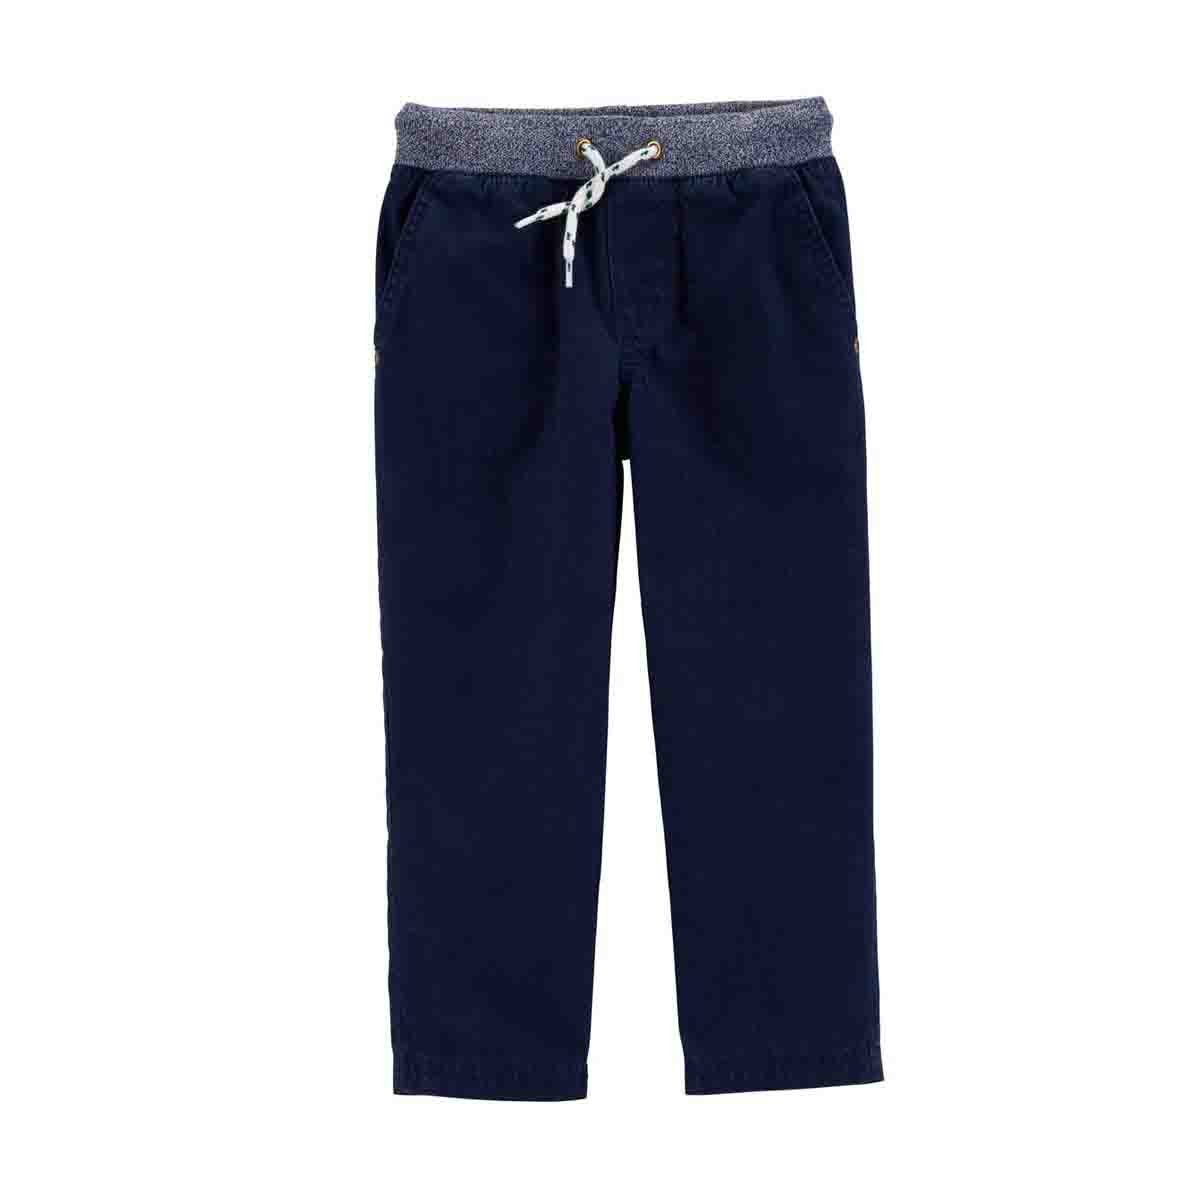 Pantalon Color Azul Marino Carters